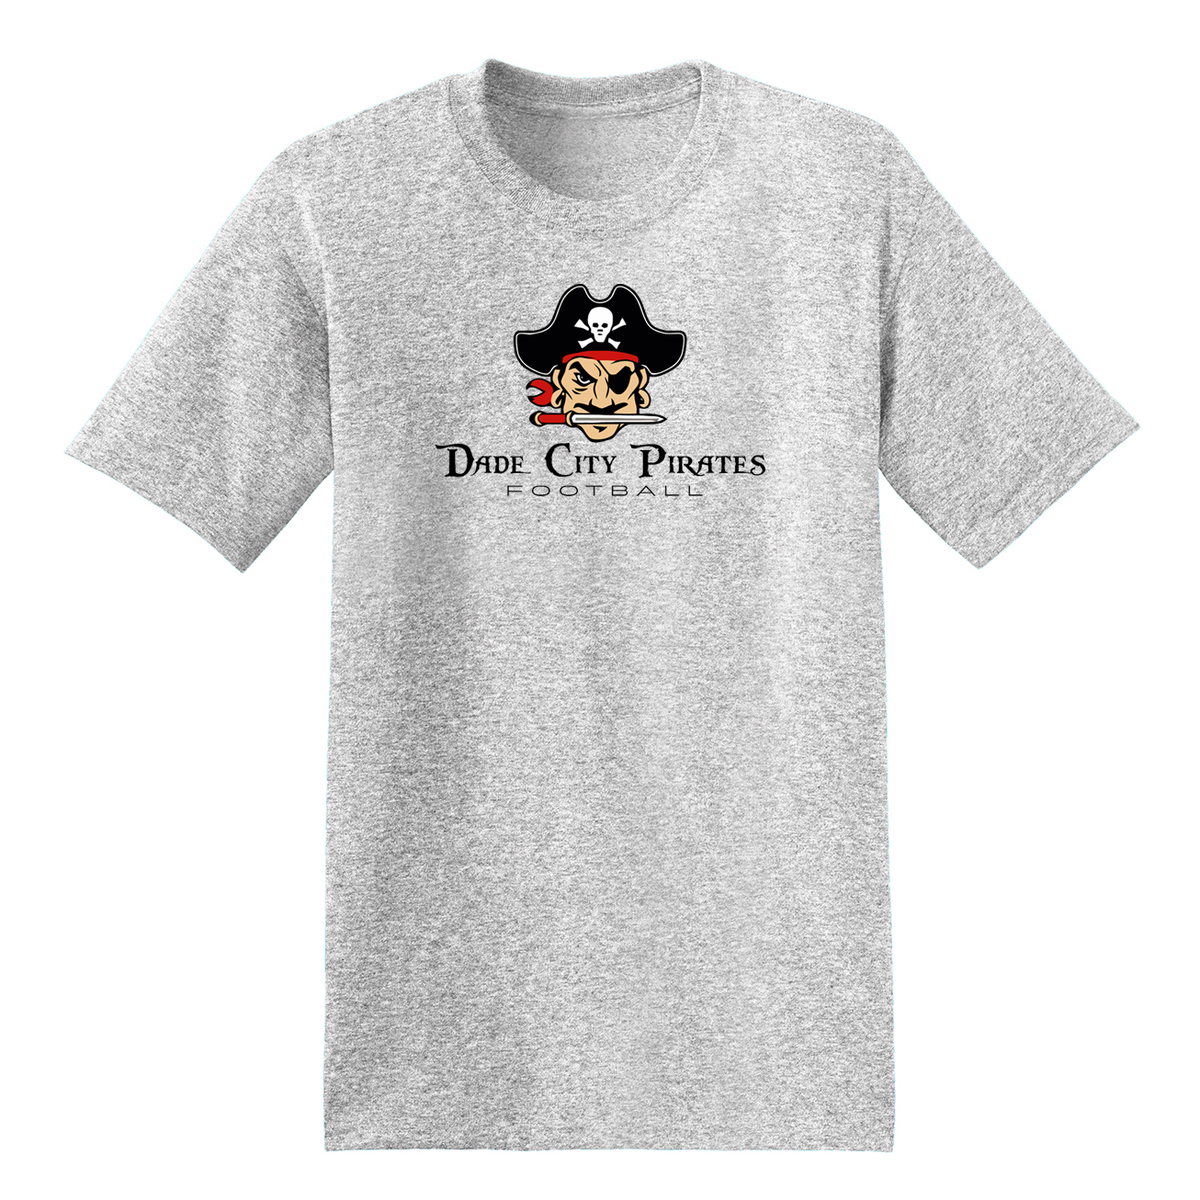 Dade City Pirates T-Shirt